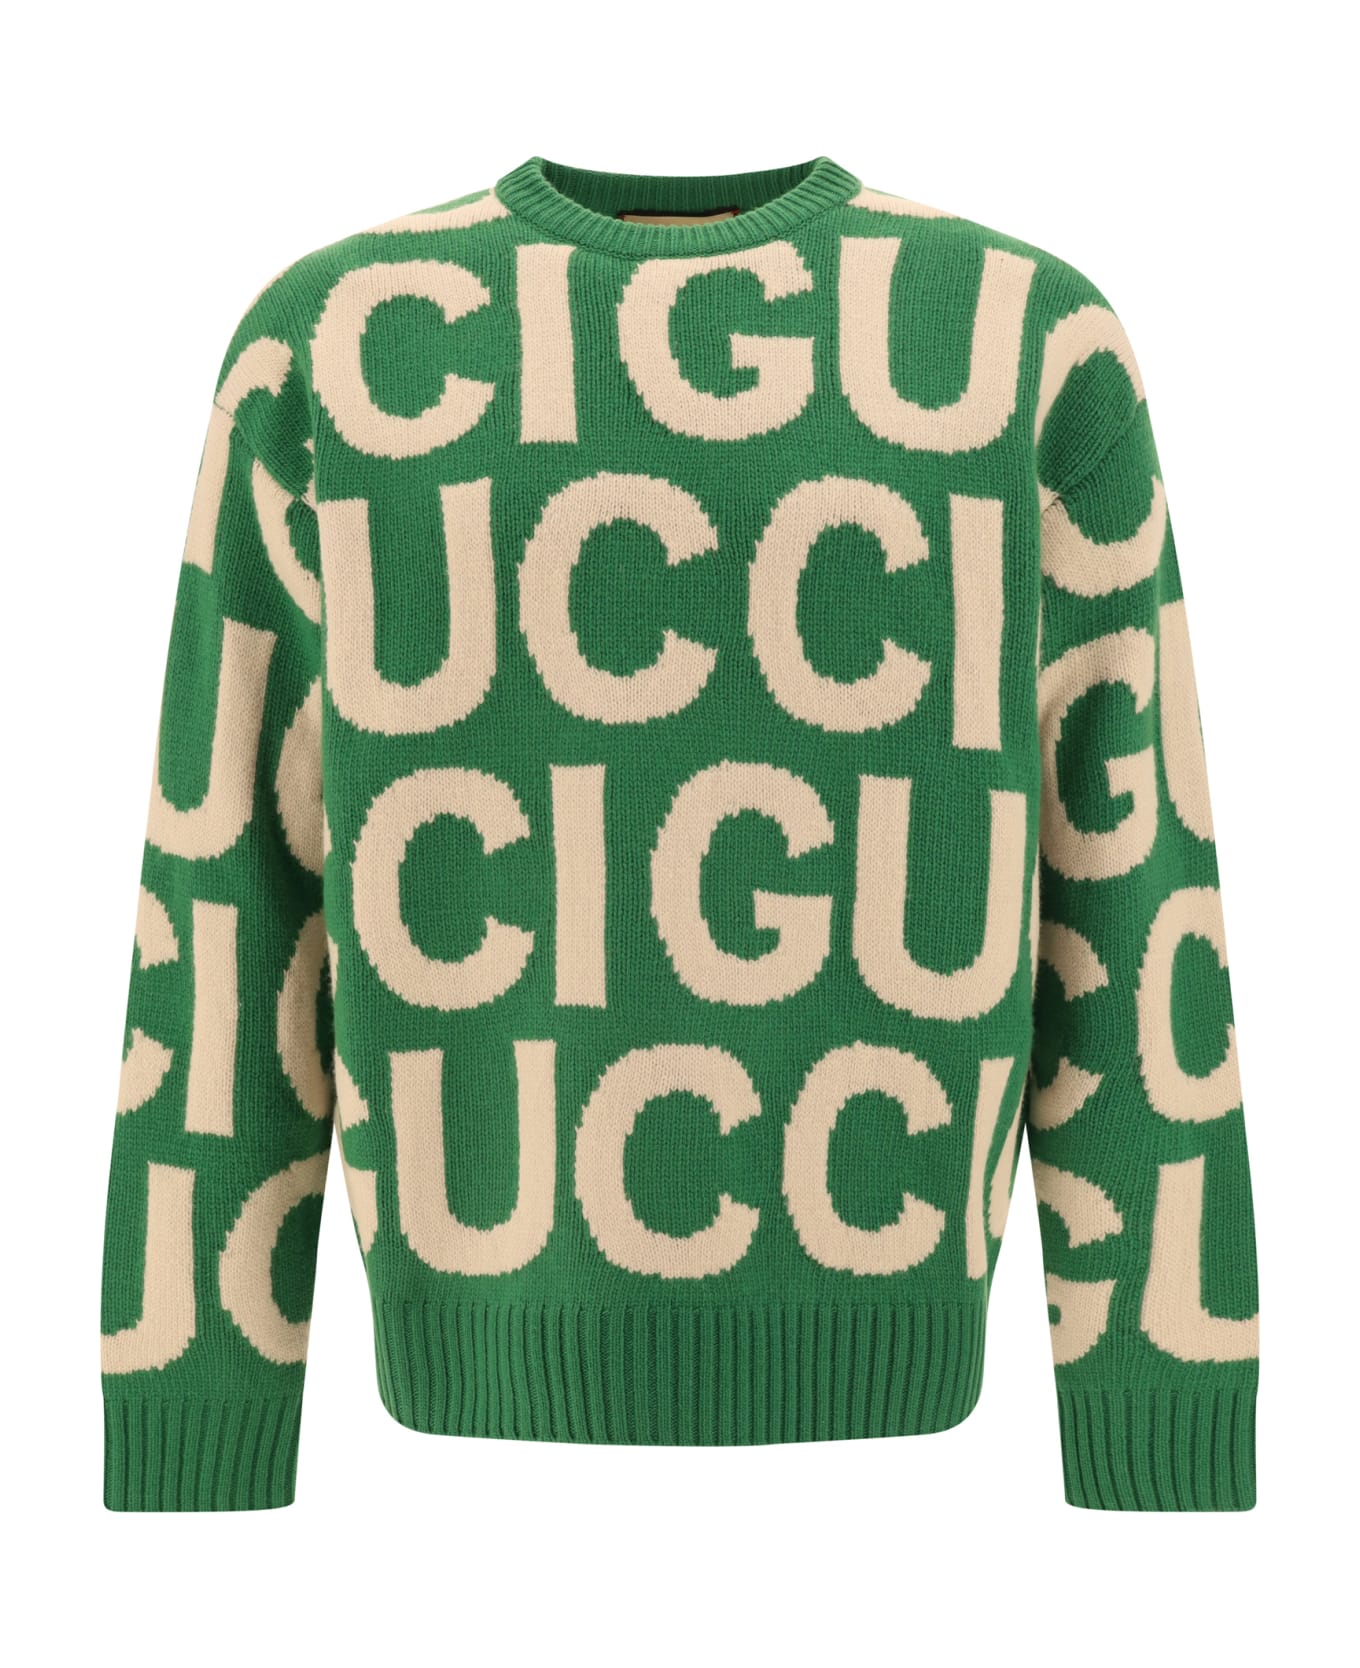 Gucci Sweater - Yard/ivory ニットウェア